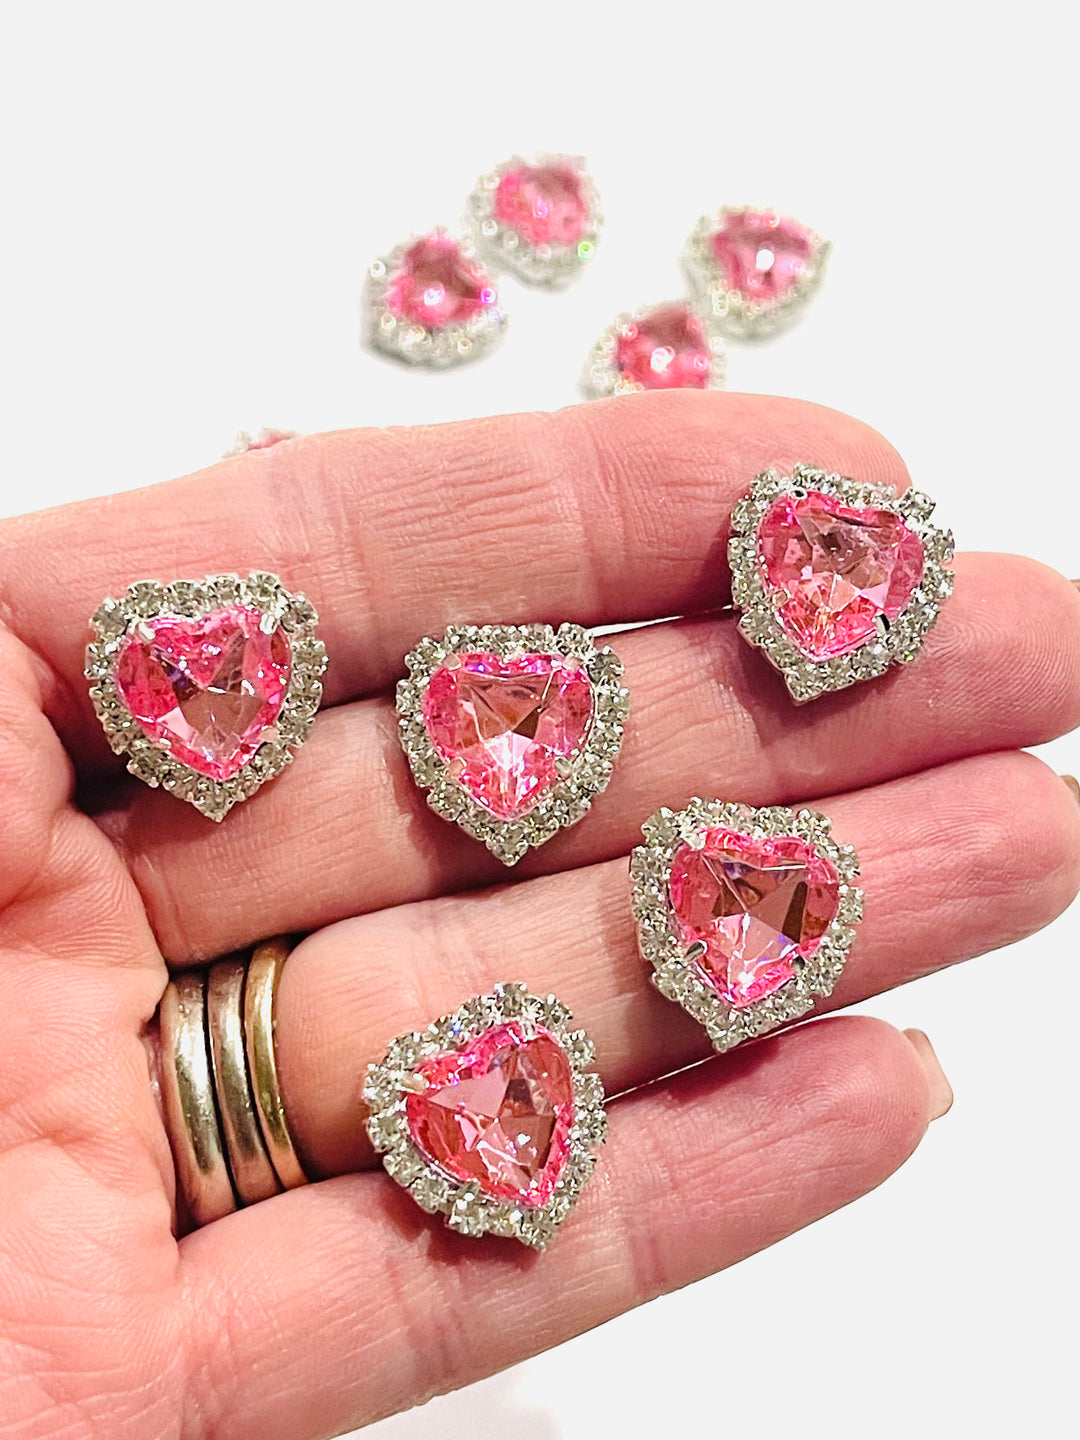 5 x Heart Shaped Rhinestone Flatback Embellishments with Silver Claw Setting - Pink